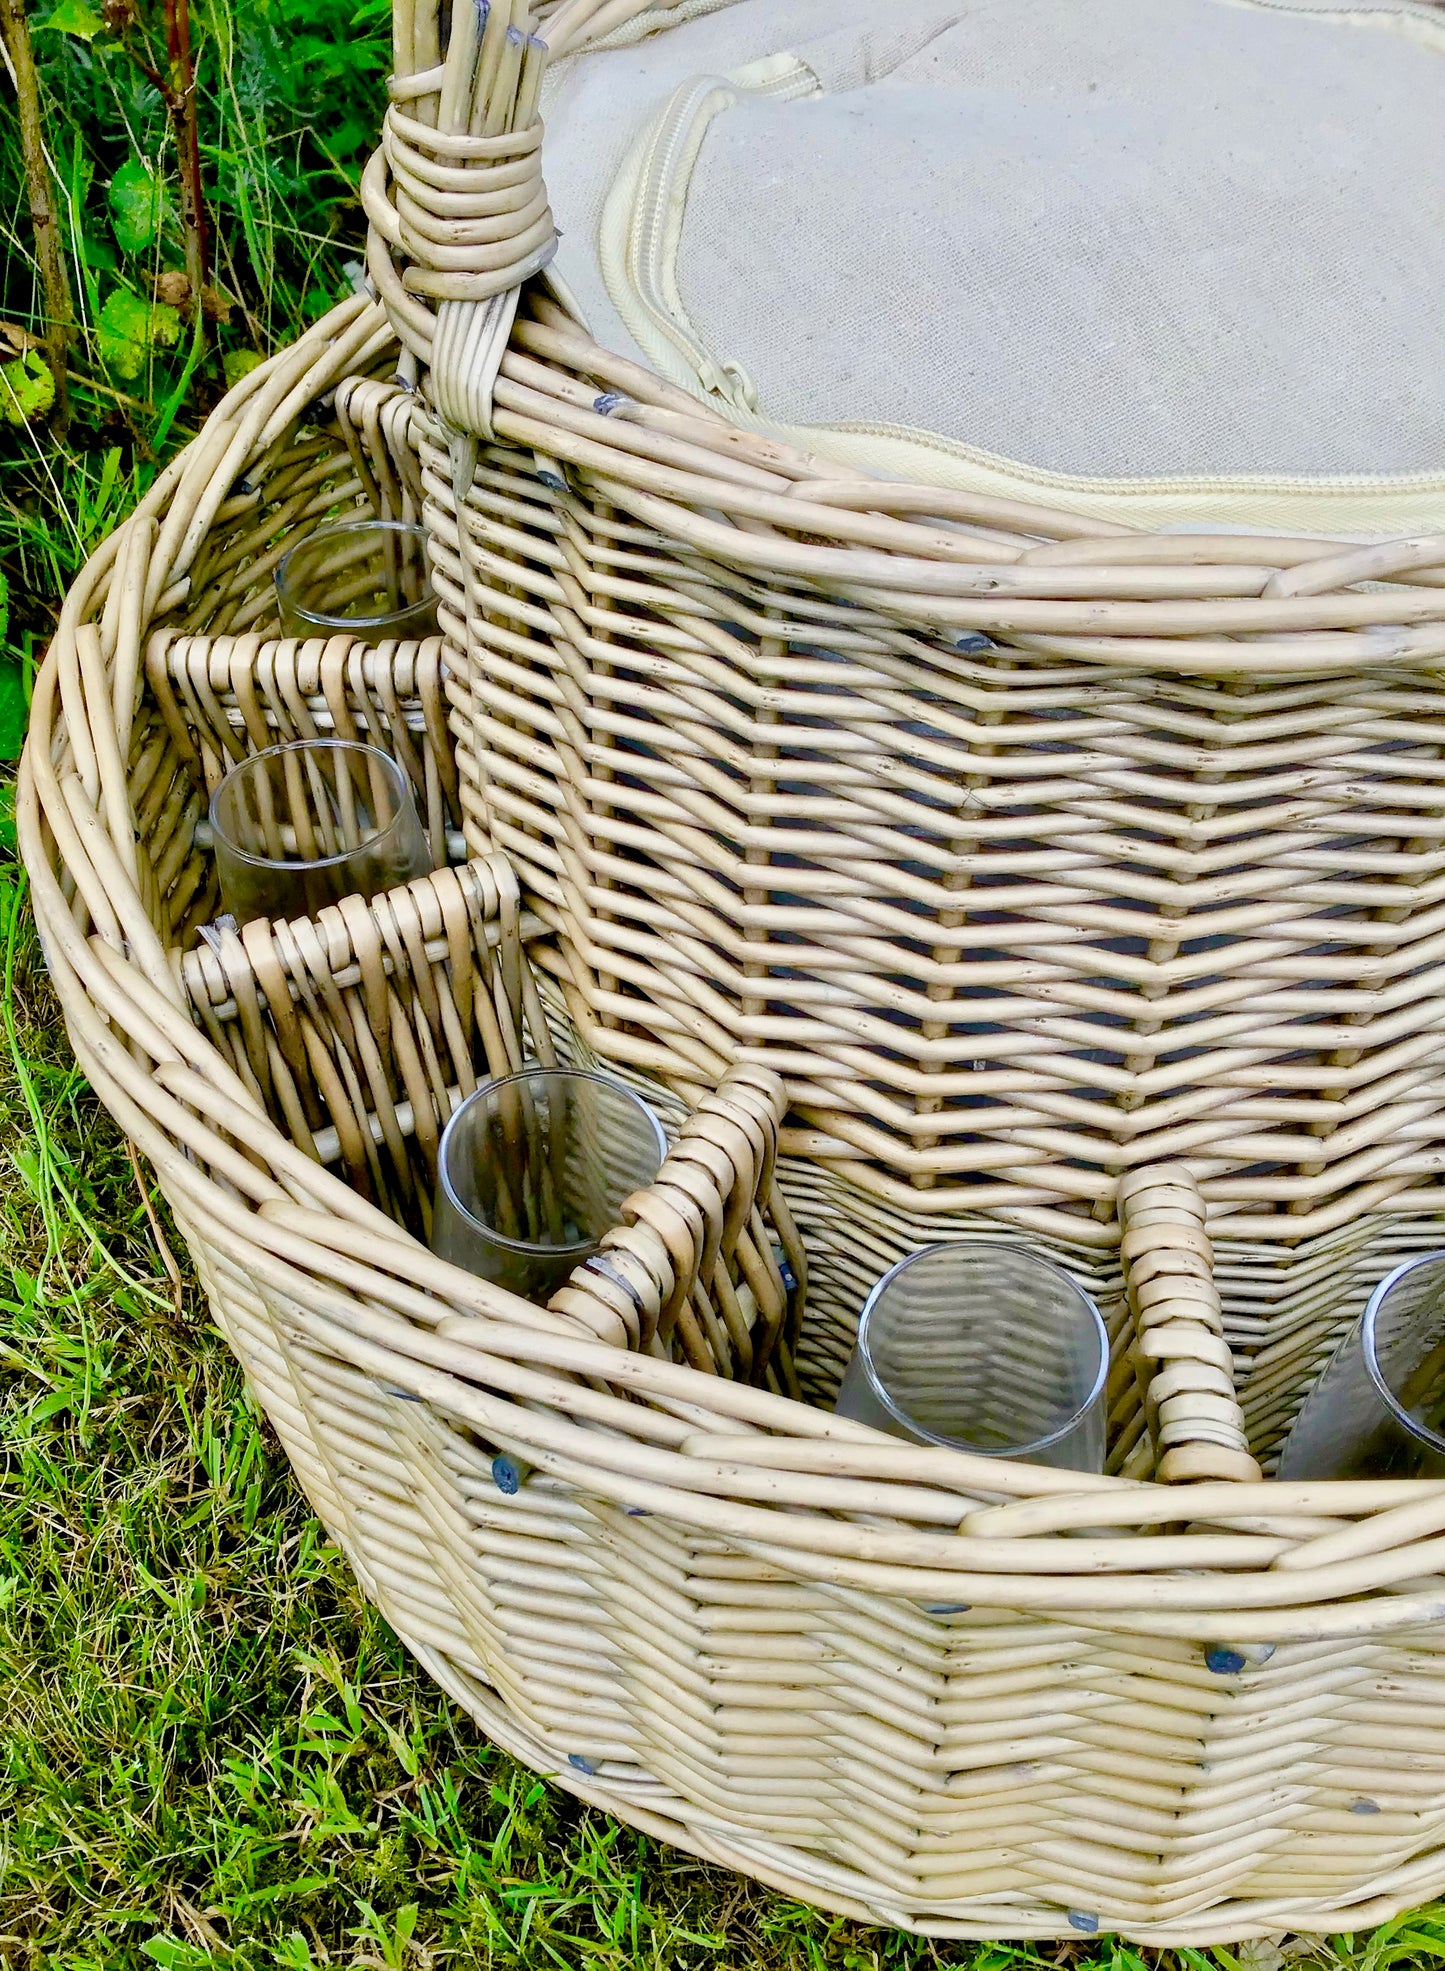 Champagne  garden party basket